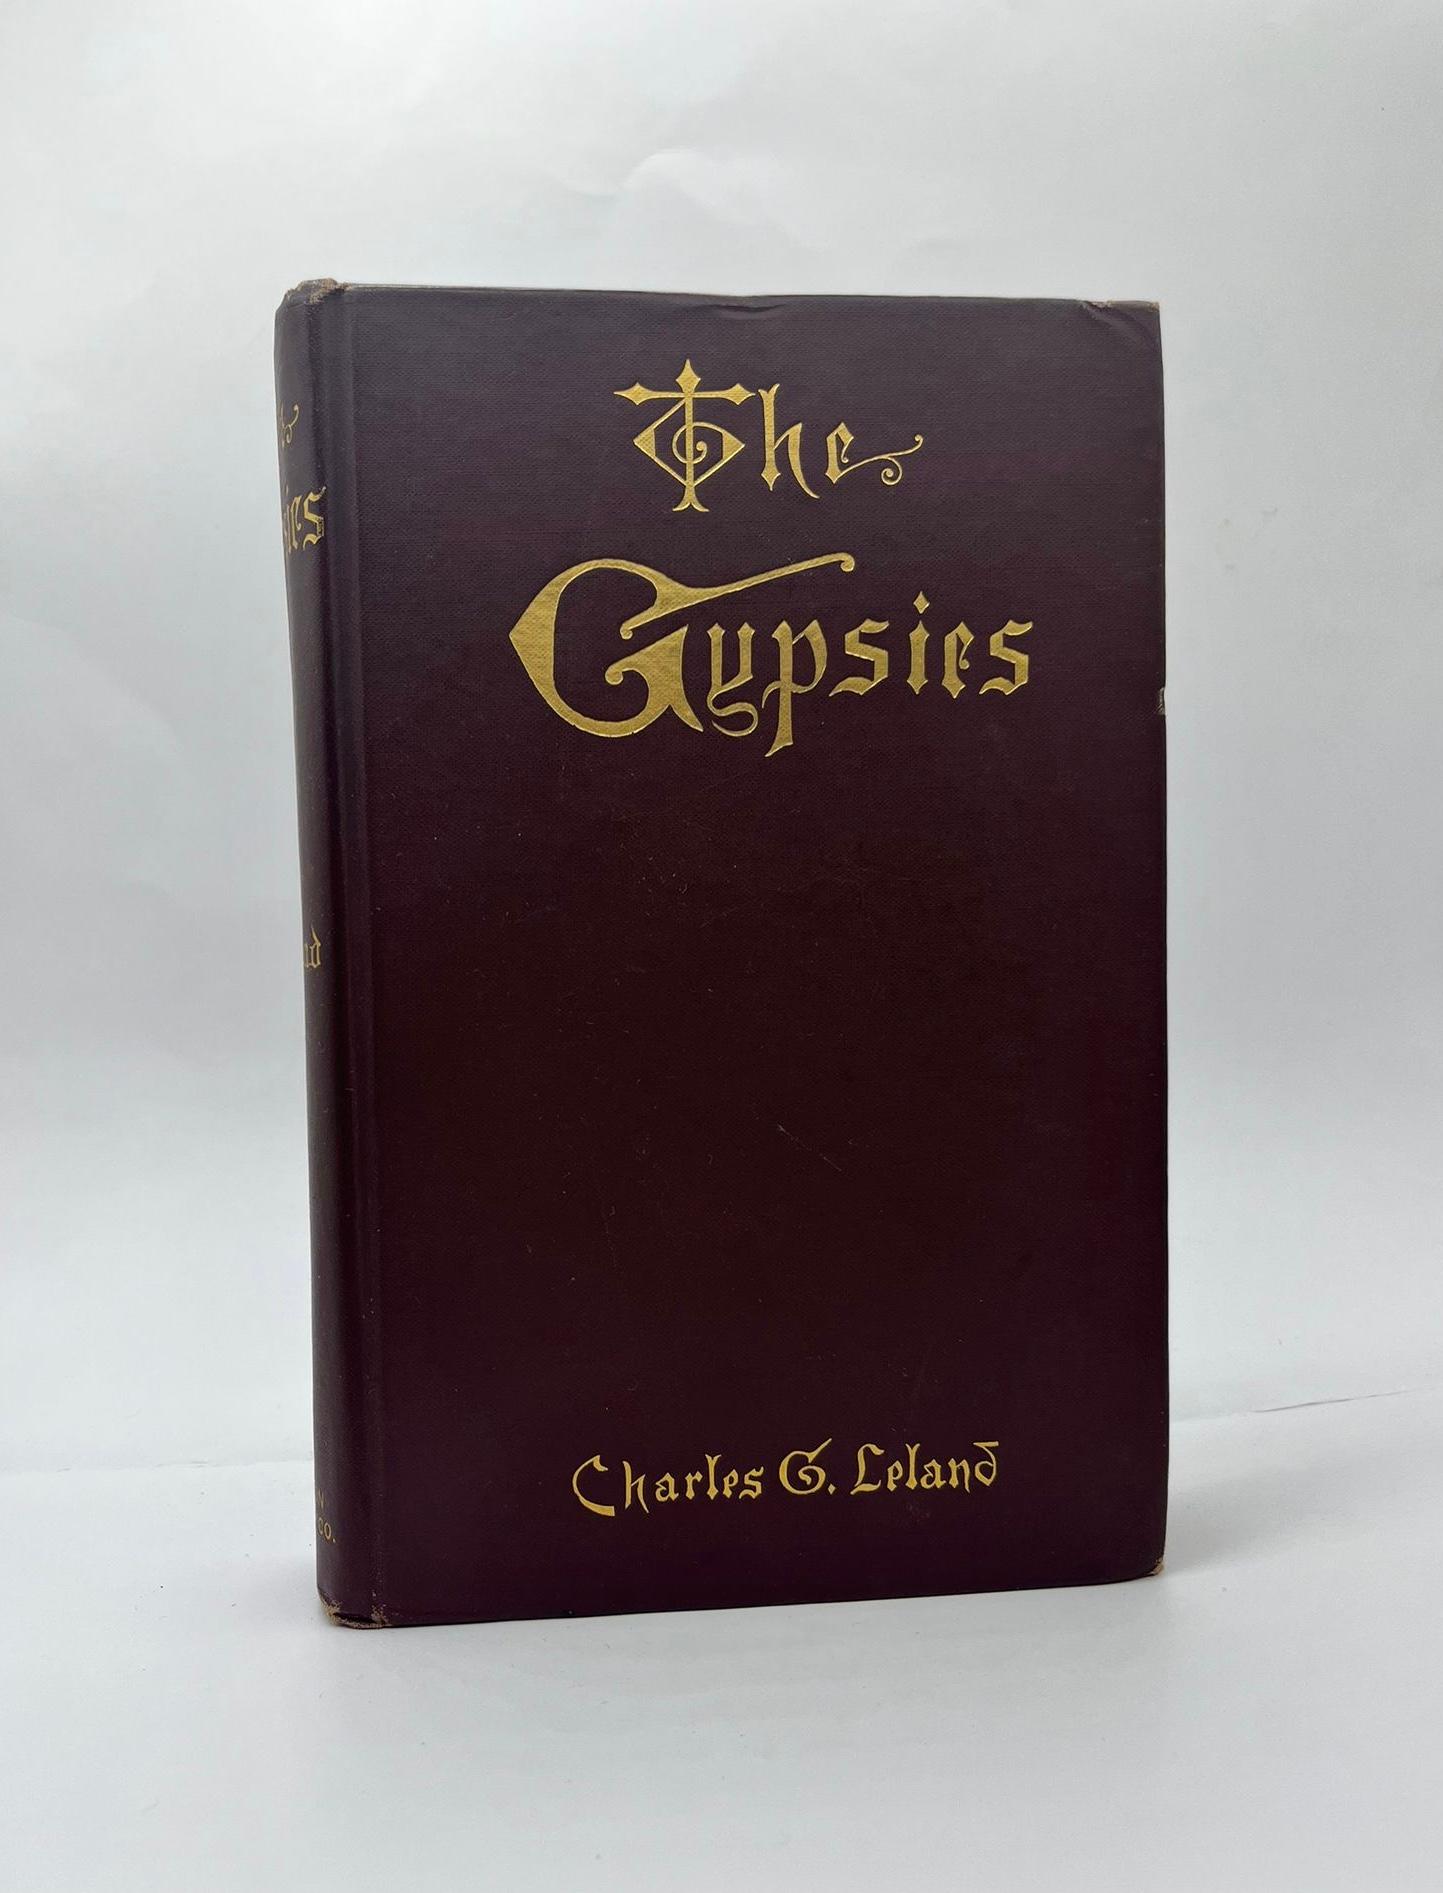 The Gypsies by Charles G. Leland